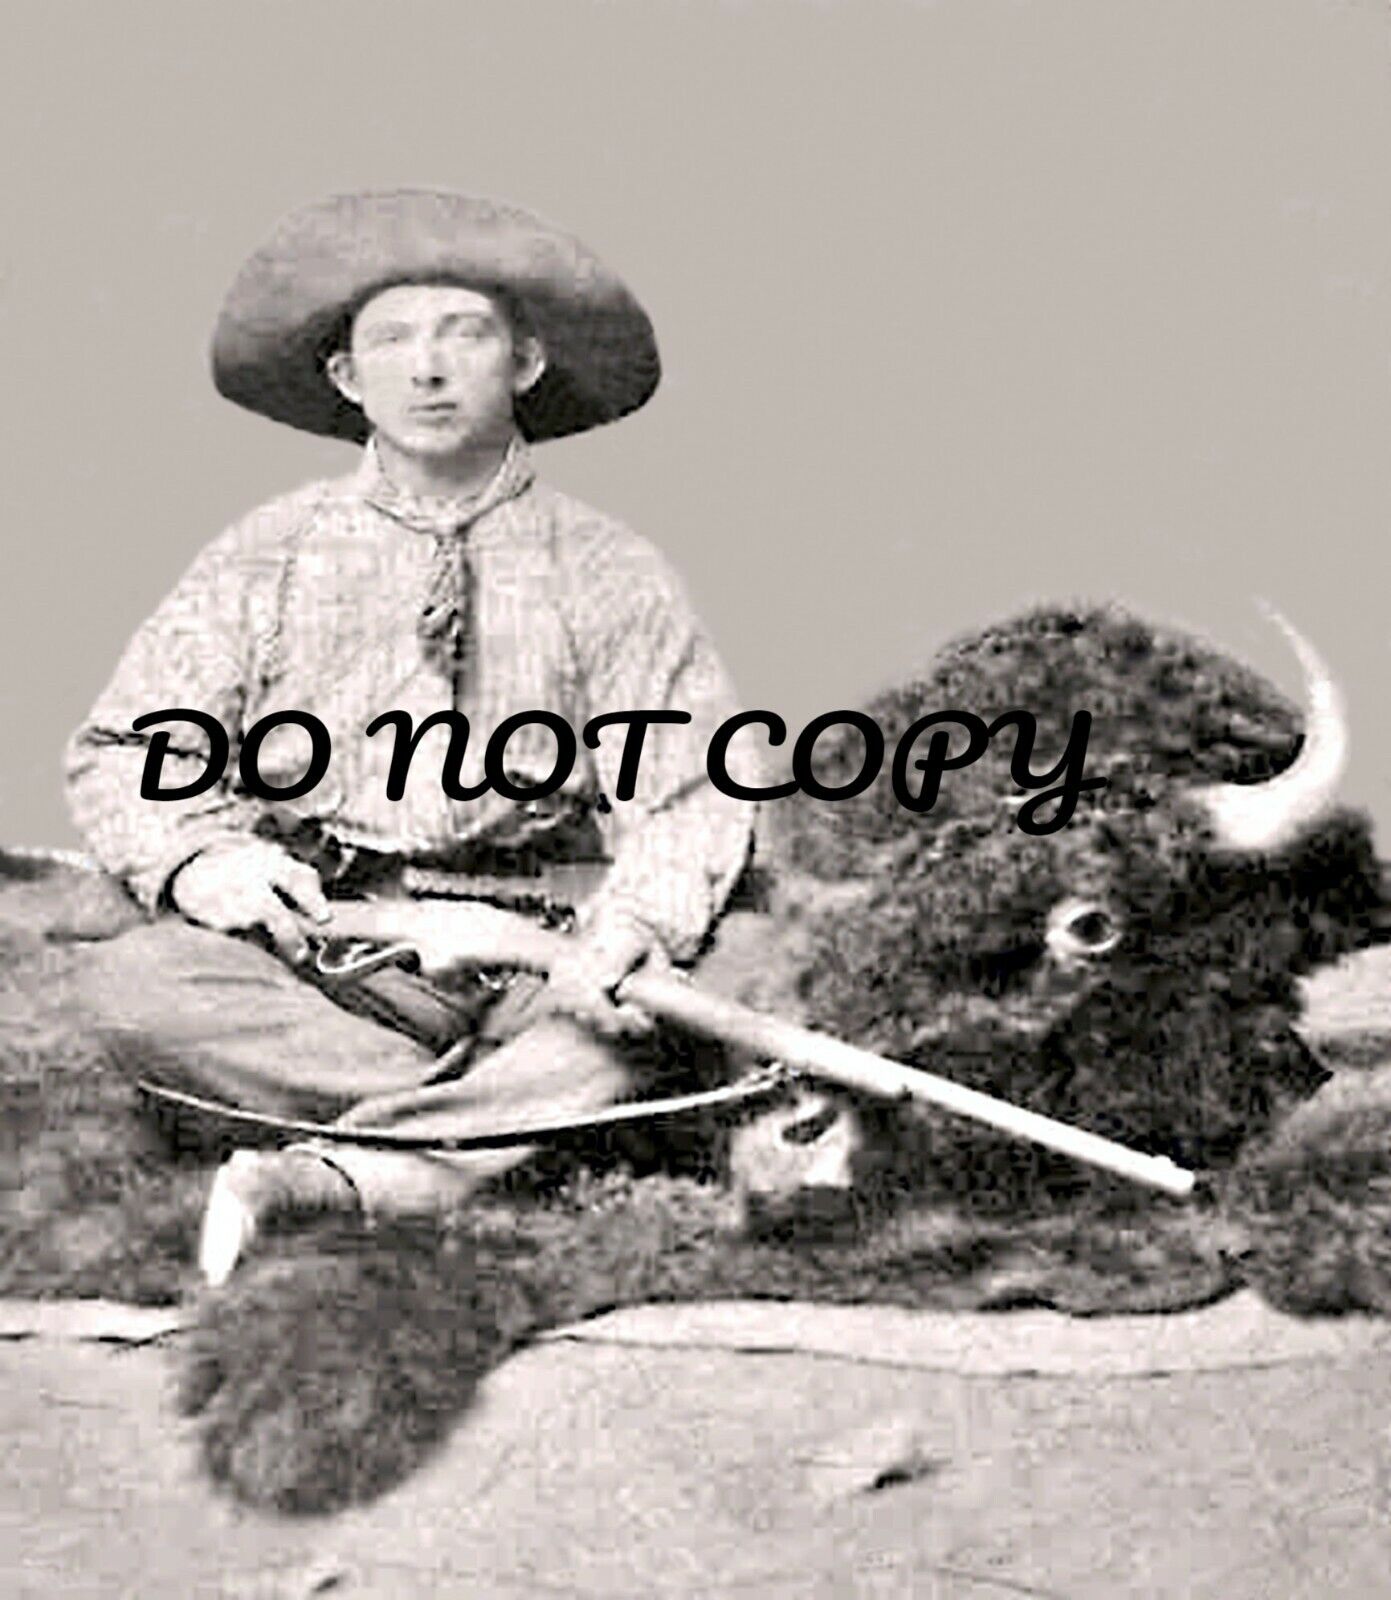 ANTIQUE 8X10 REPRO PHOTO PRINT BUFFALO HUNTER COWBOY 1874 SPENCER RIFLE